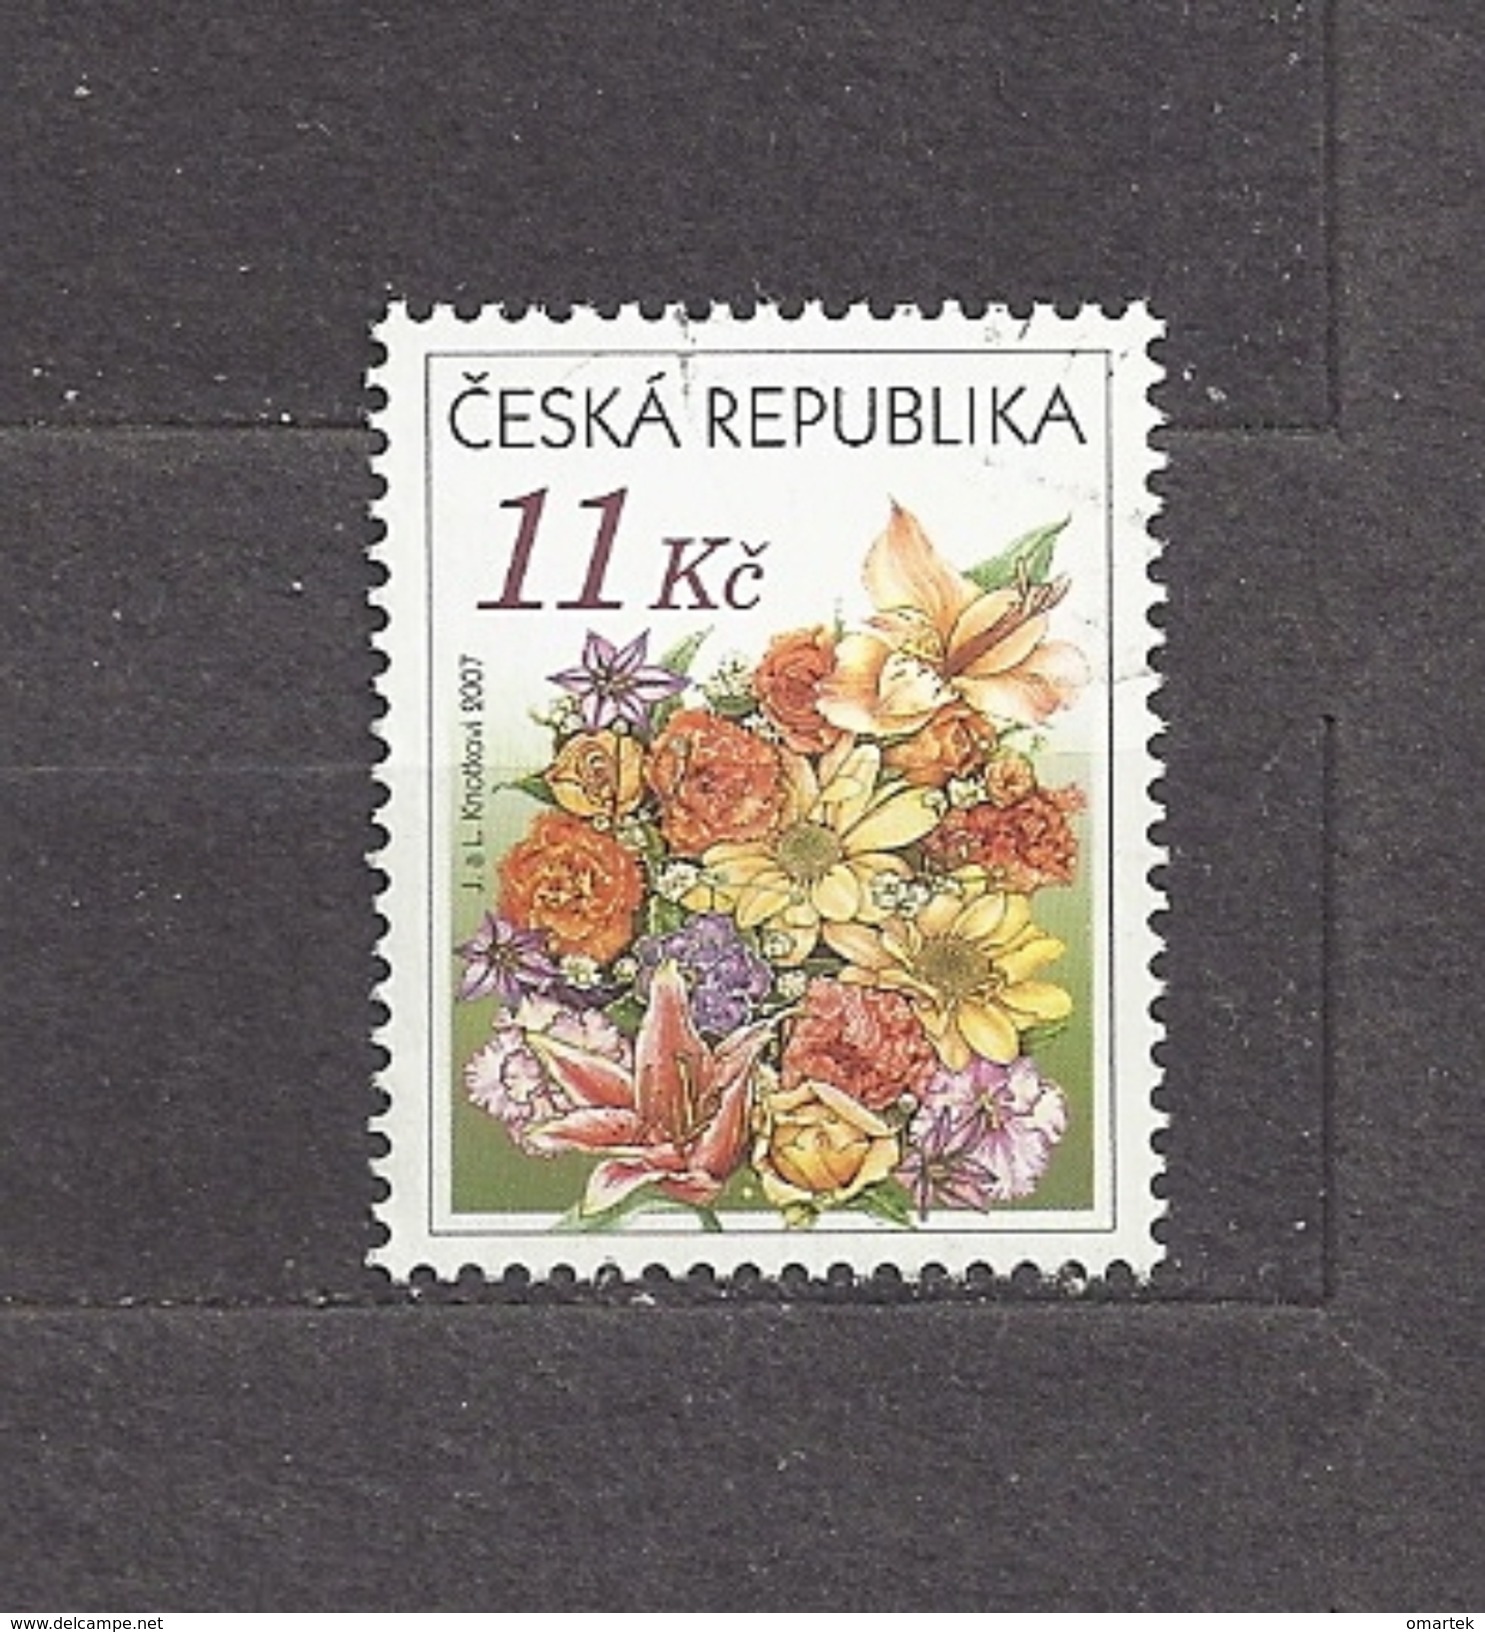 Czech Republic Tschechische Republik 2007 ⊙ Mi 510 Sc 3340 Flowers  Congratulation Bouquet. Day Of Issue:  26.3.2007. - Used Stamps